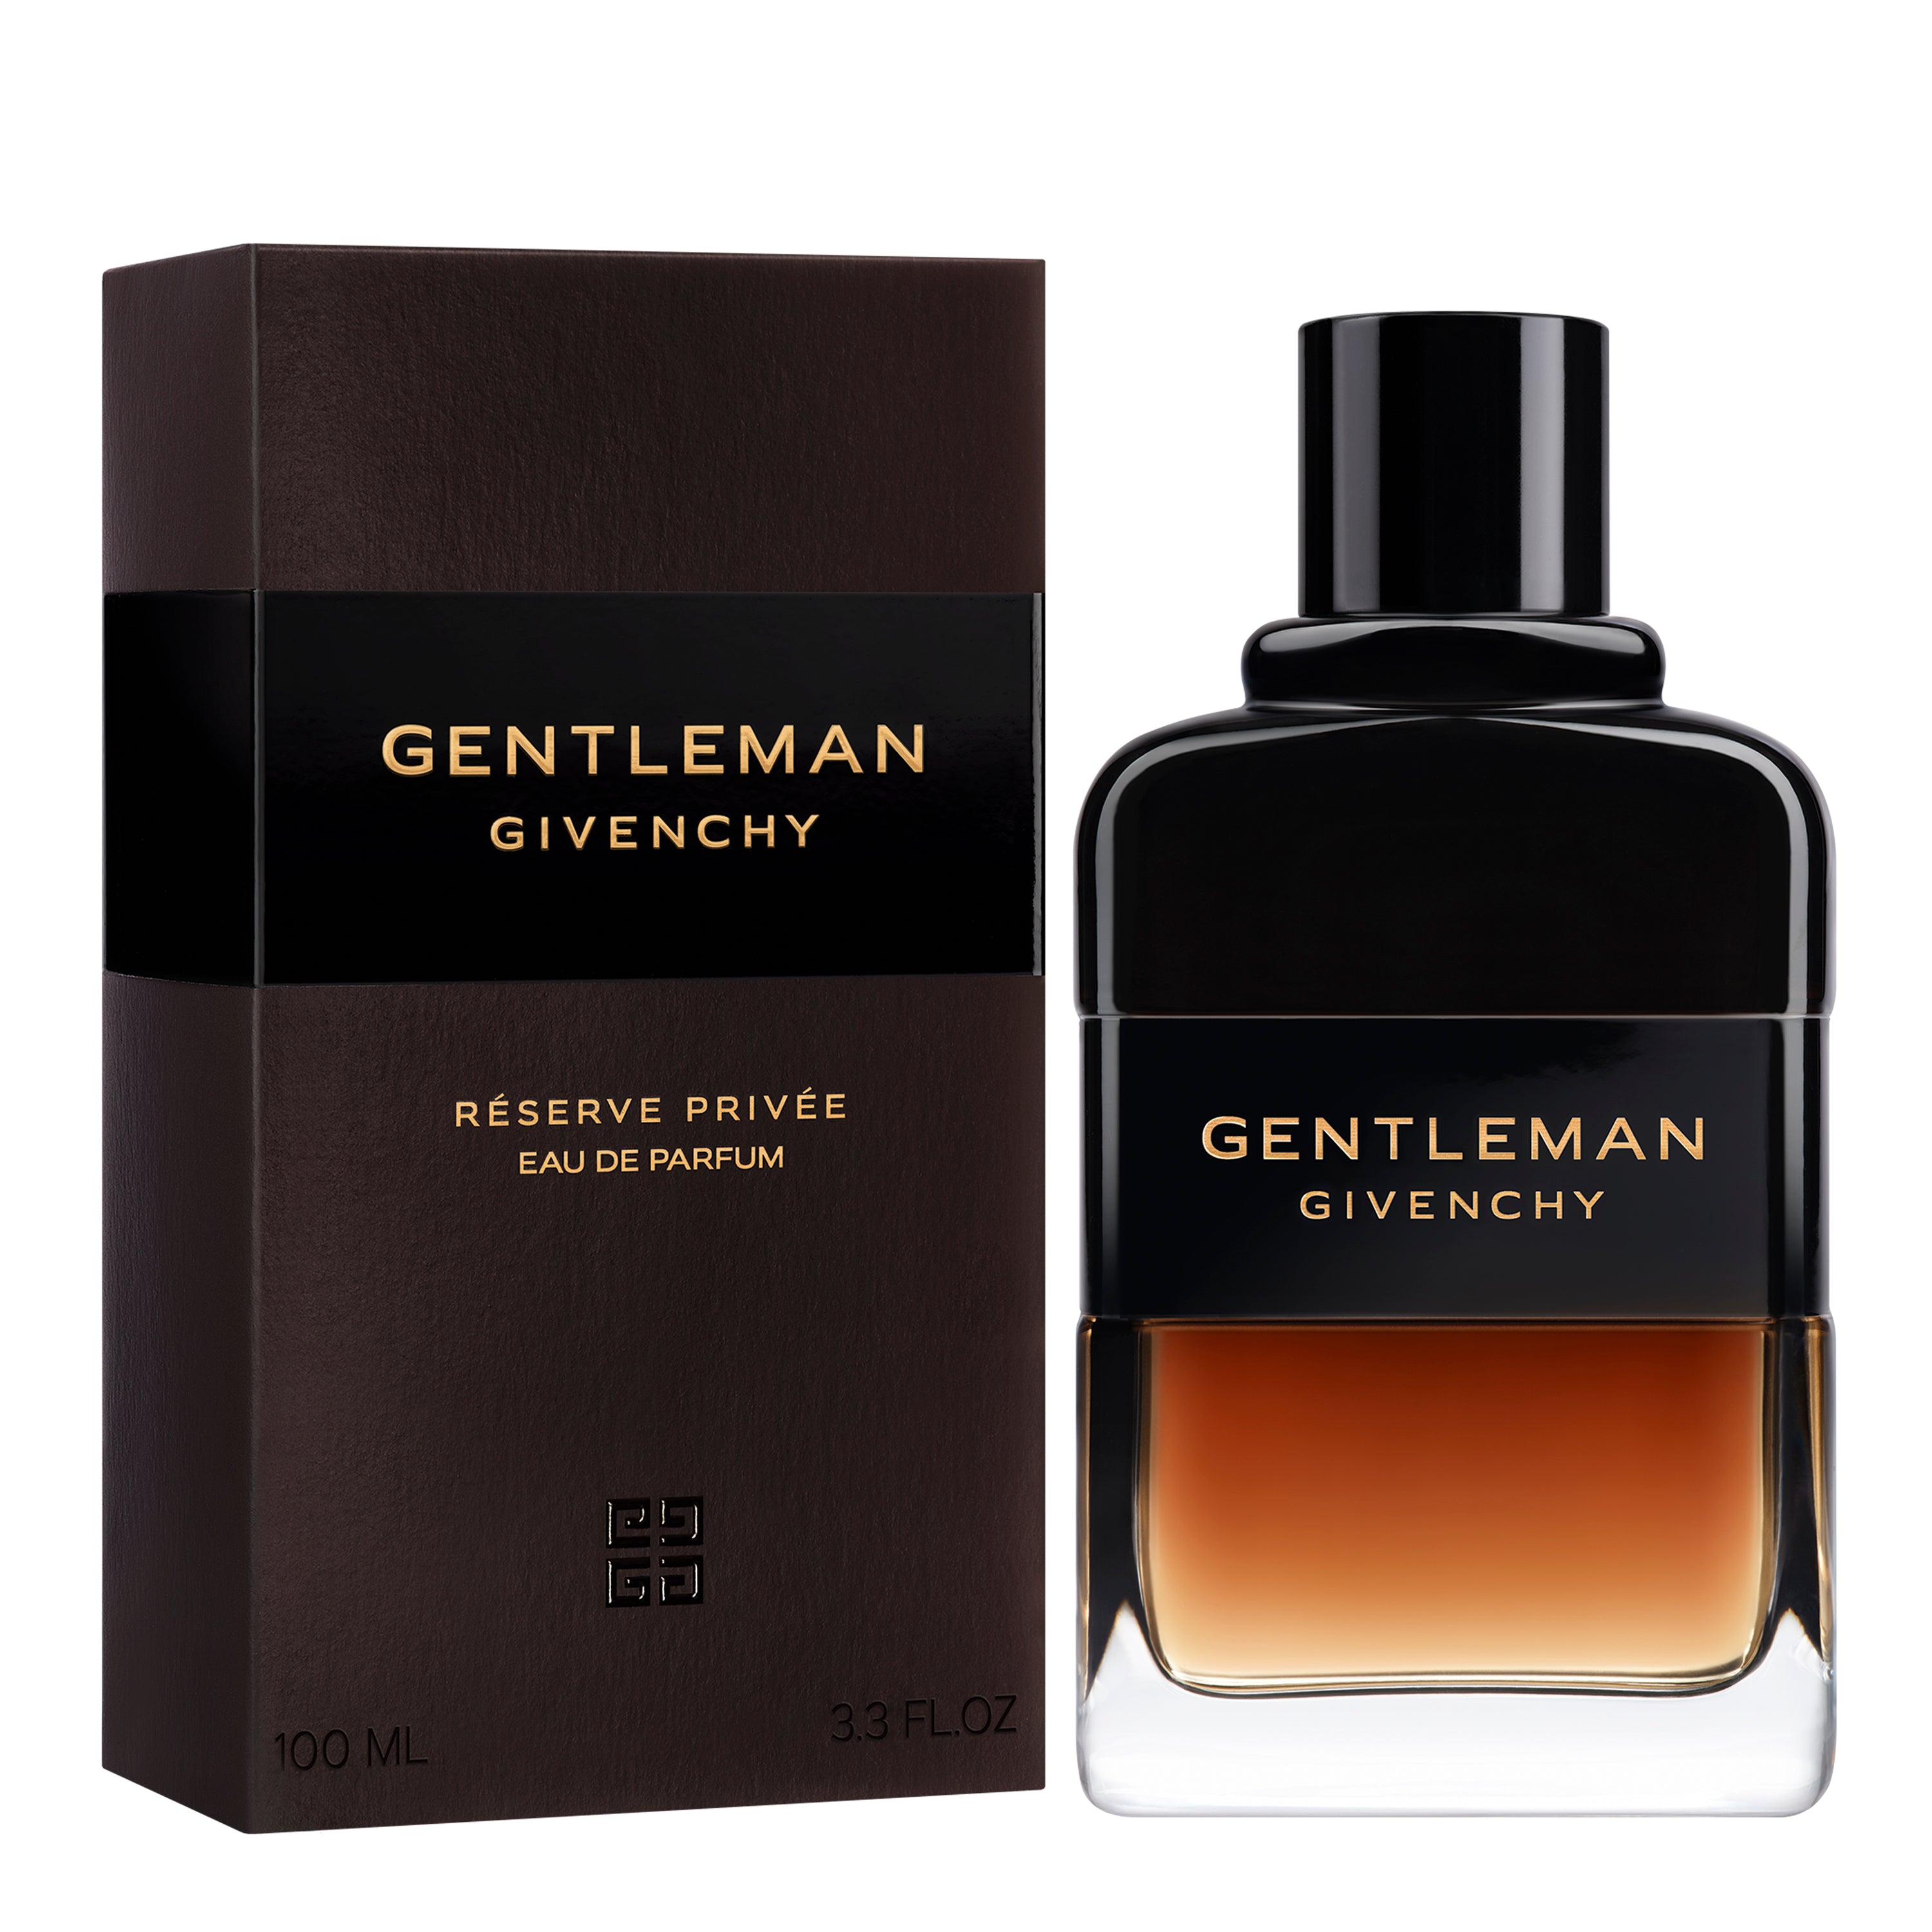 Gentleman Givenchy Reserve Privee